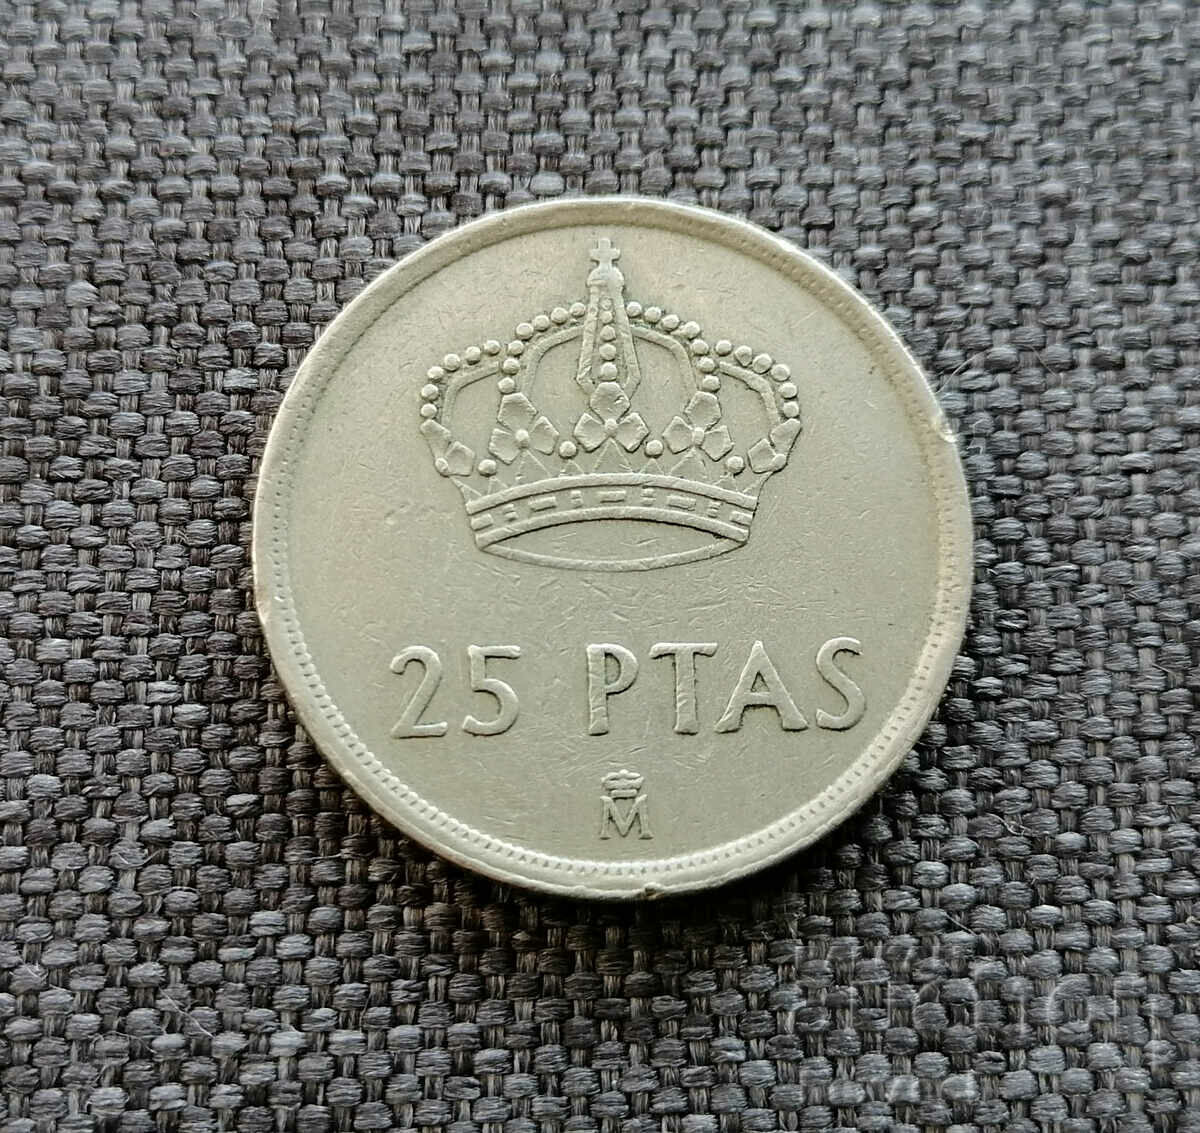 ❤️ ⭐ Spain 1982 25 pesetas ⭐ ❤️